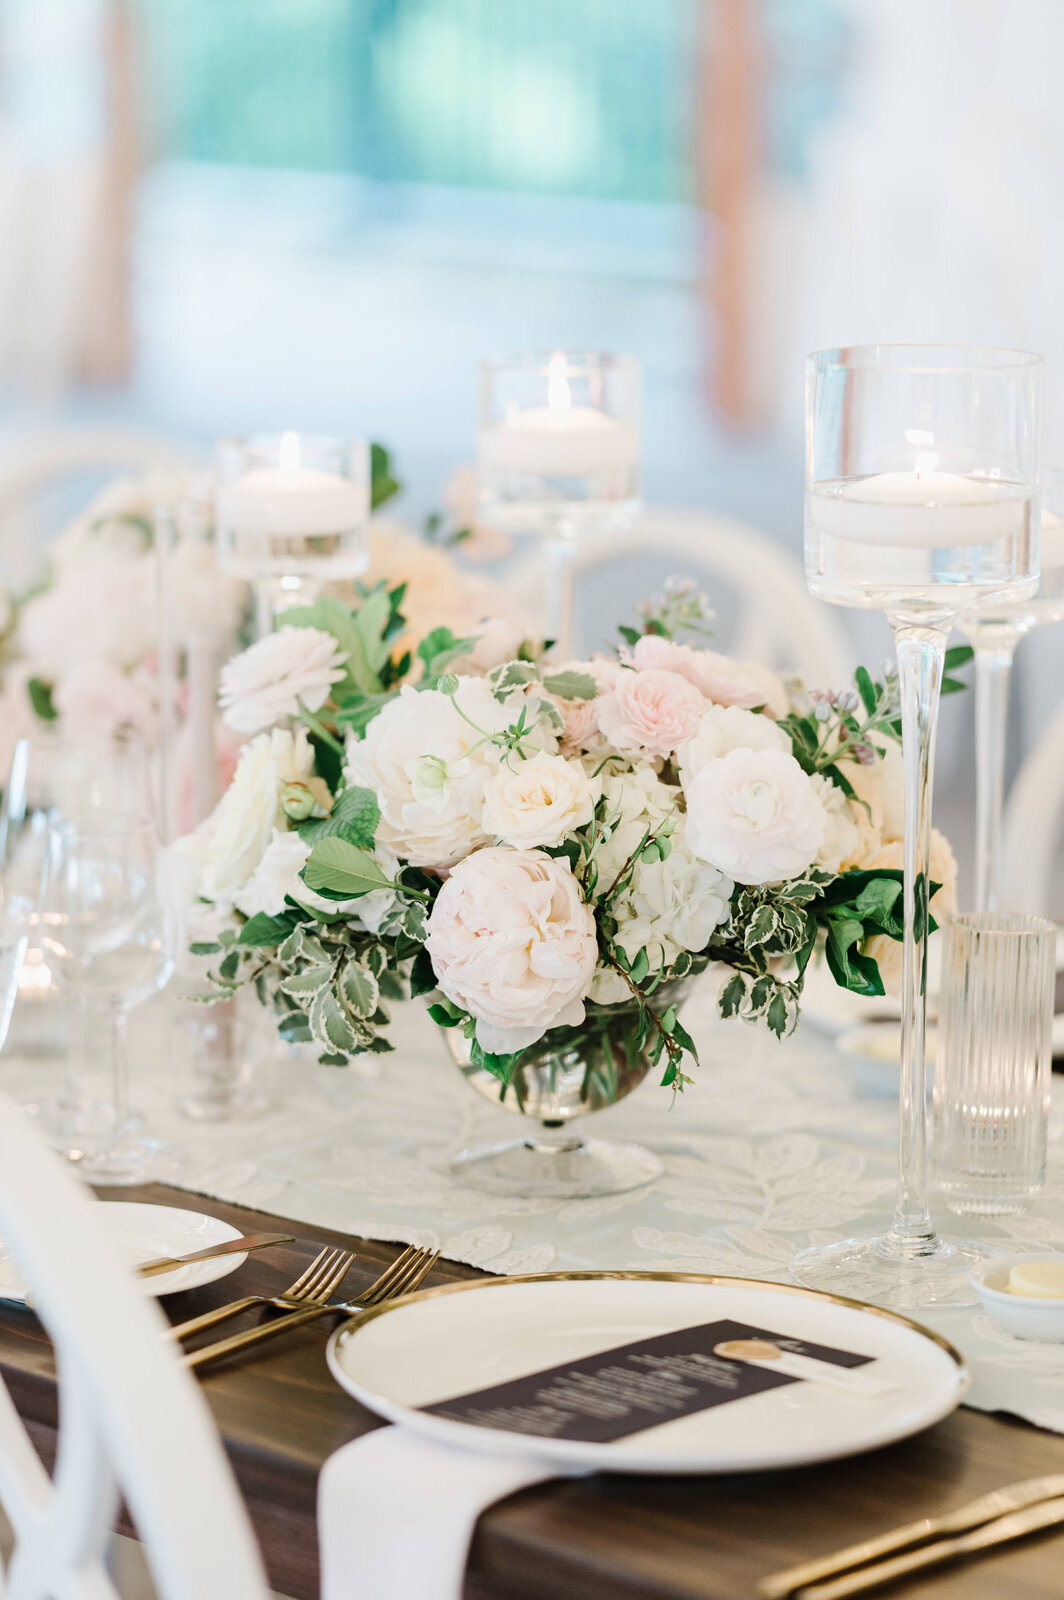 Kate-Murtaugh-Events-Newport-RI-Castle-Hill-Inn-floral-centerpiece-wedding-planner